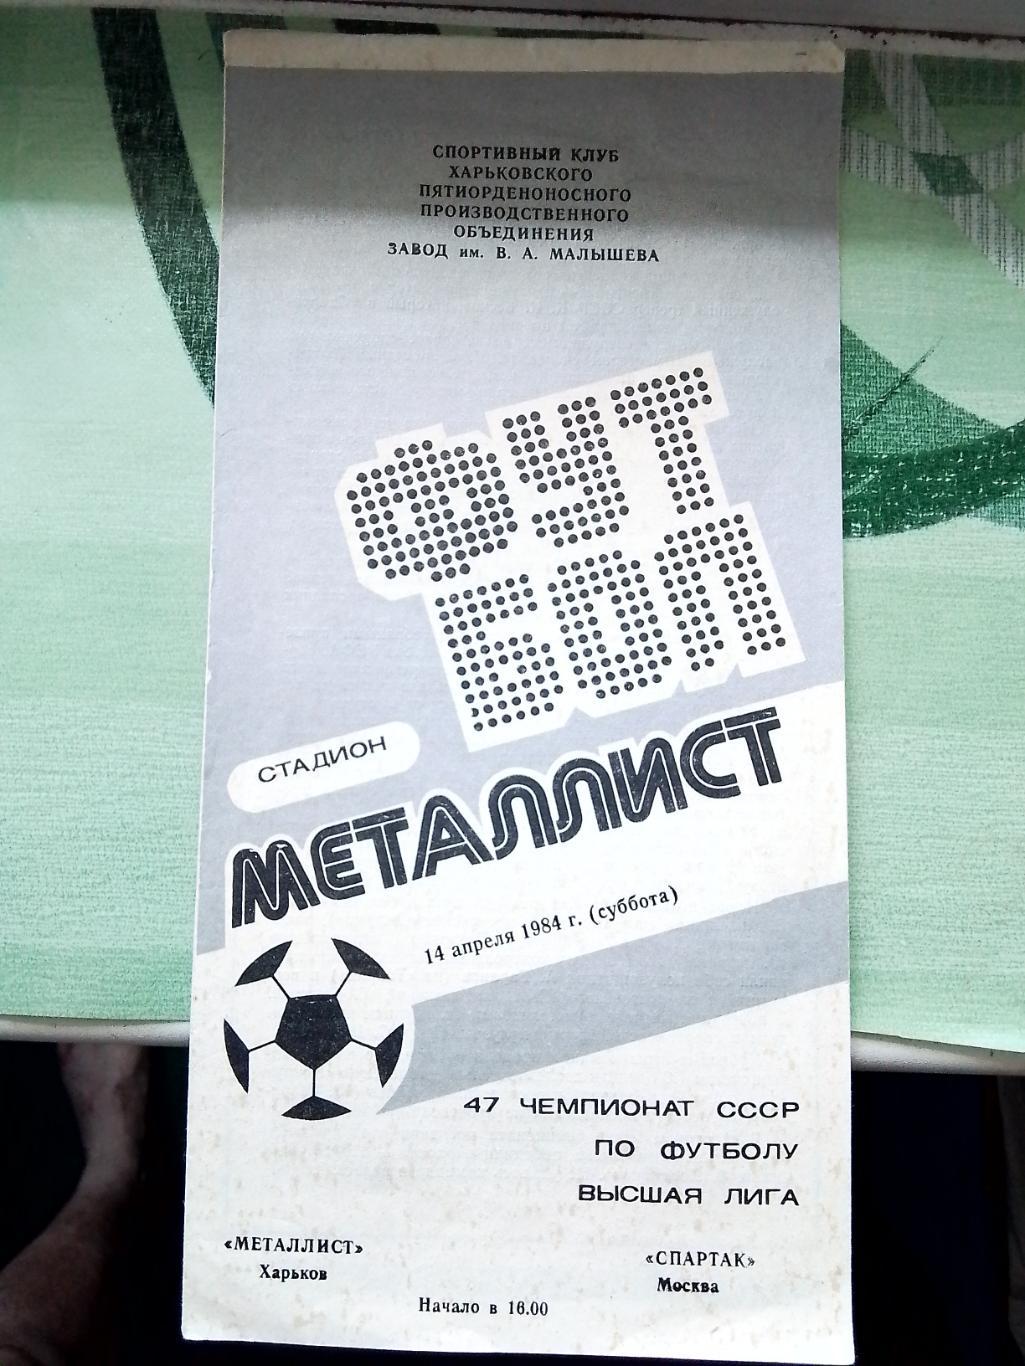 Металлист Харьков - Спартак Москва 1984